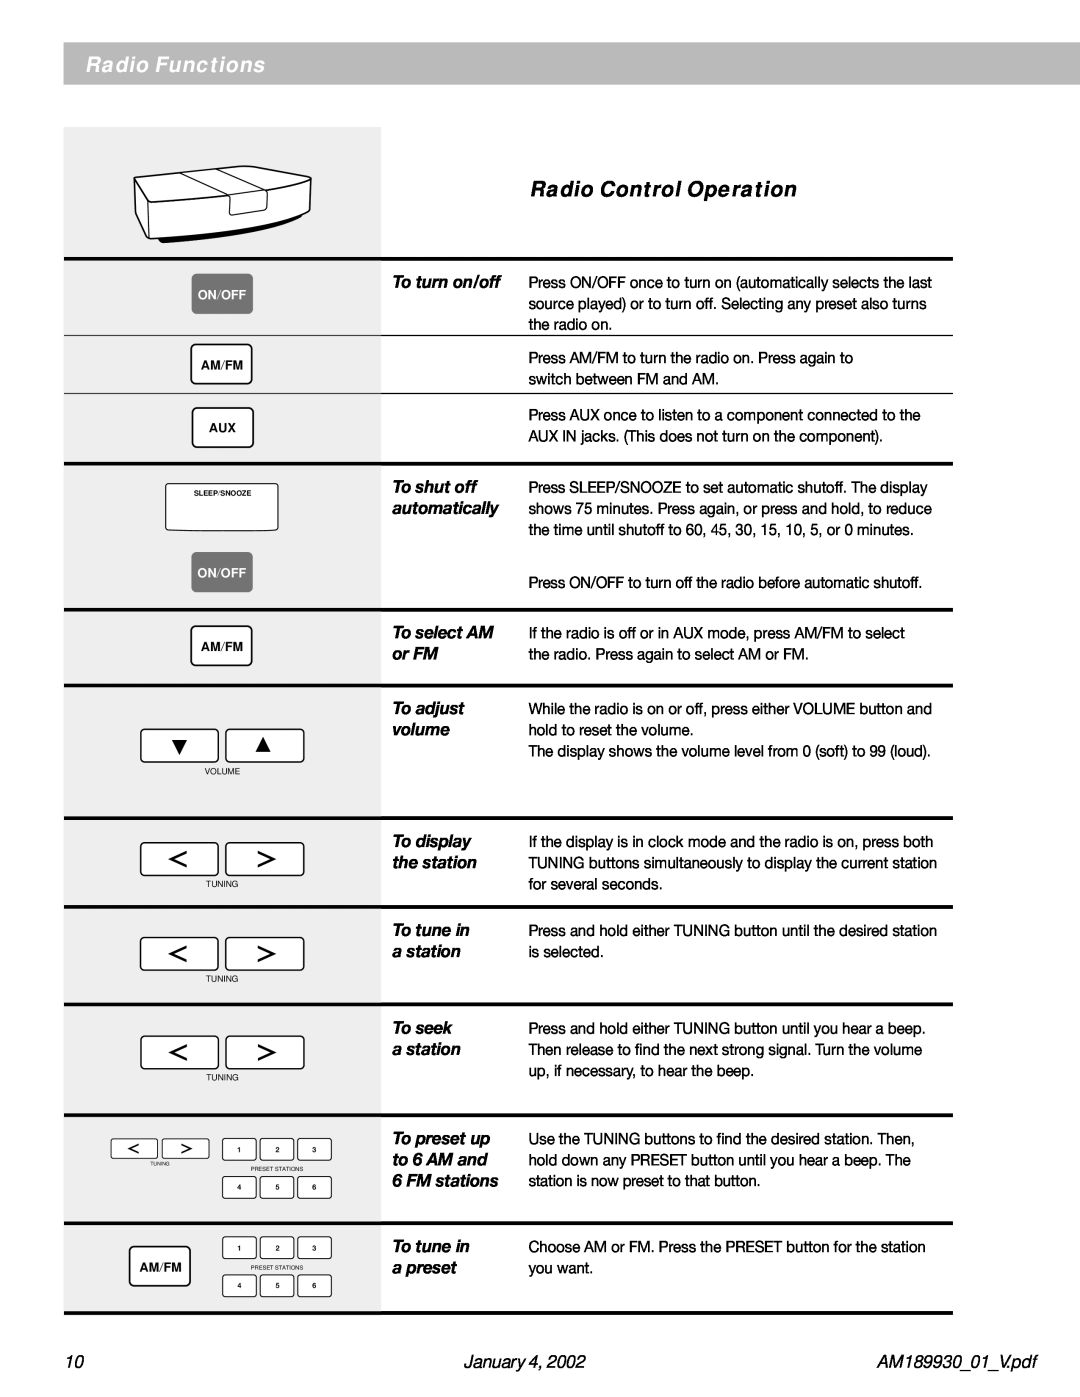 Bose AM189930 manual Radio Functions, Radio Control Operation, January 